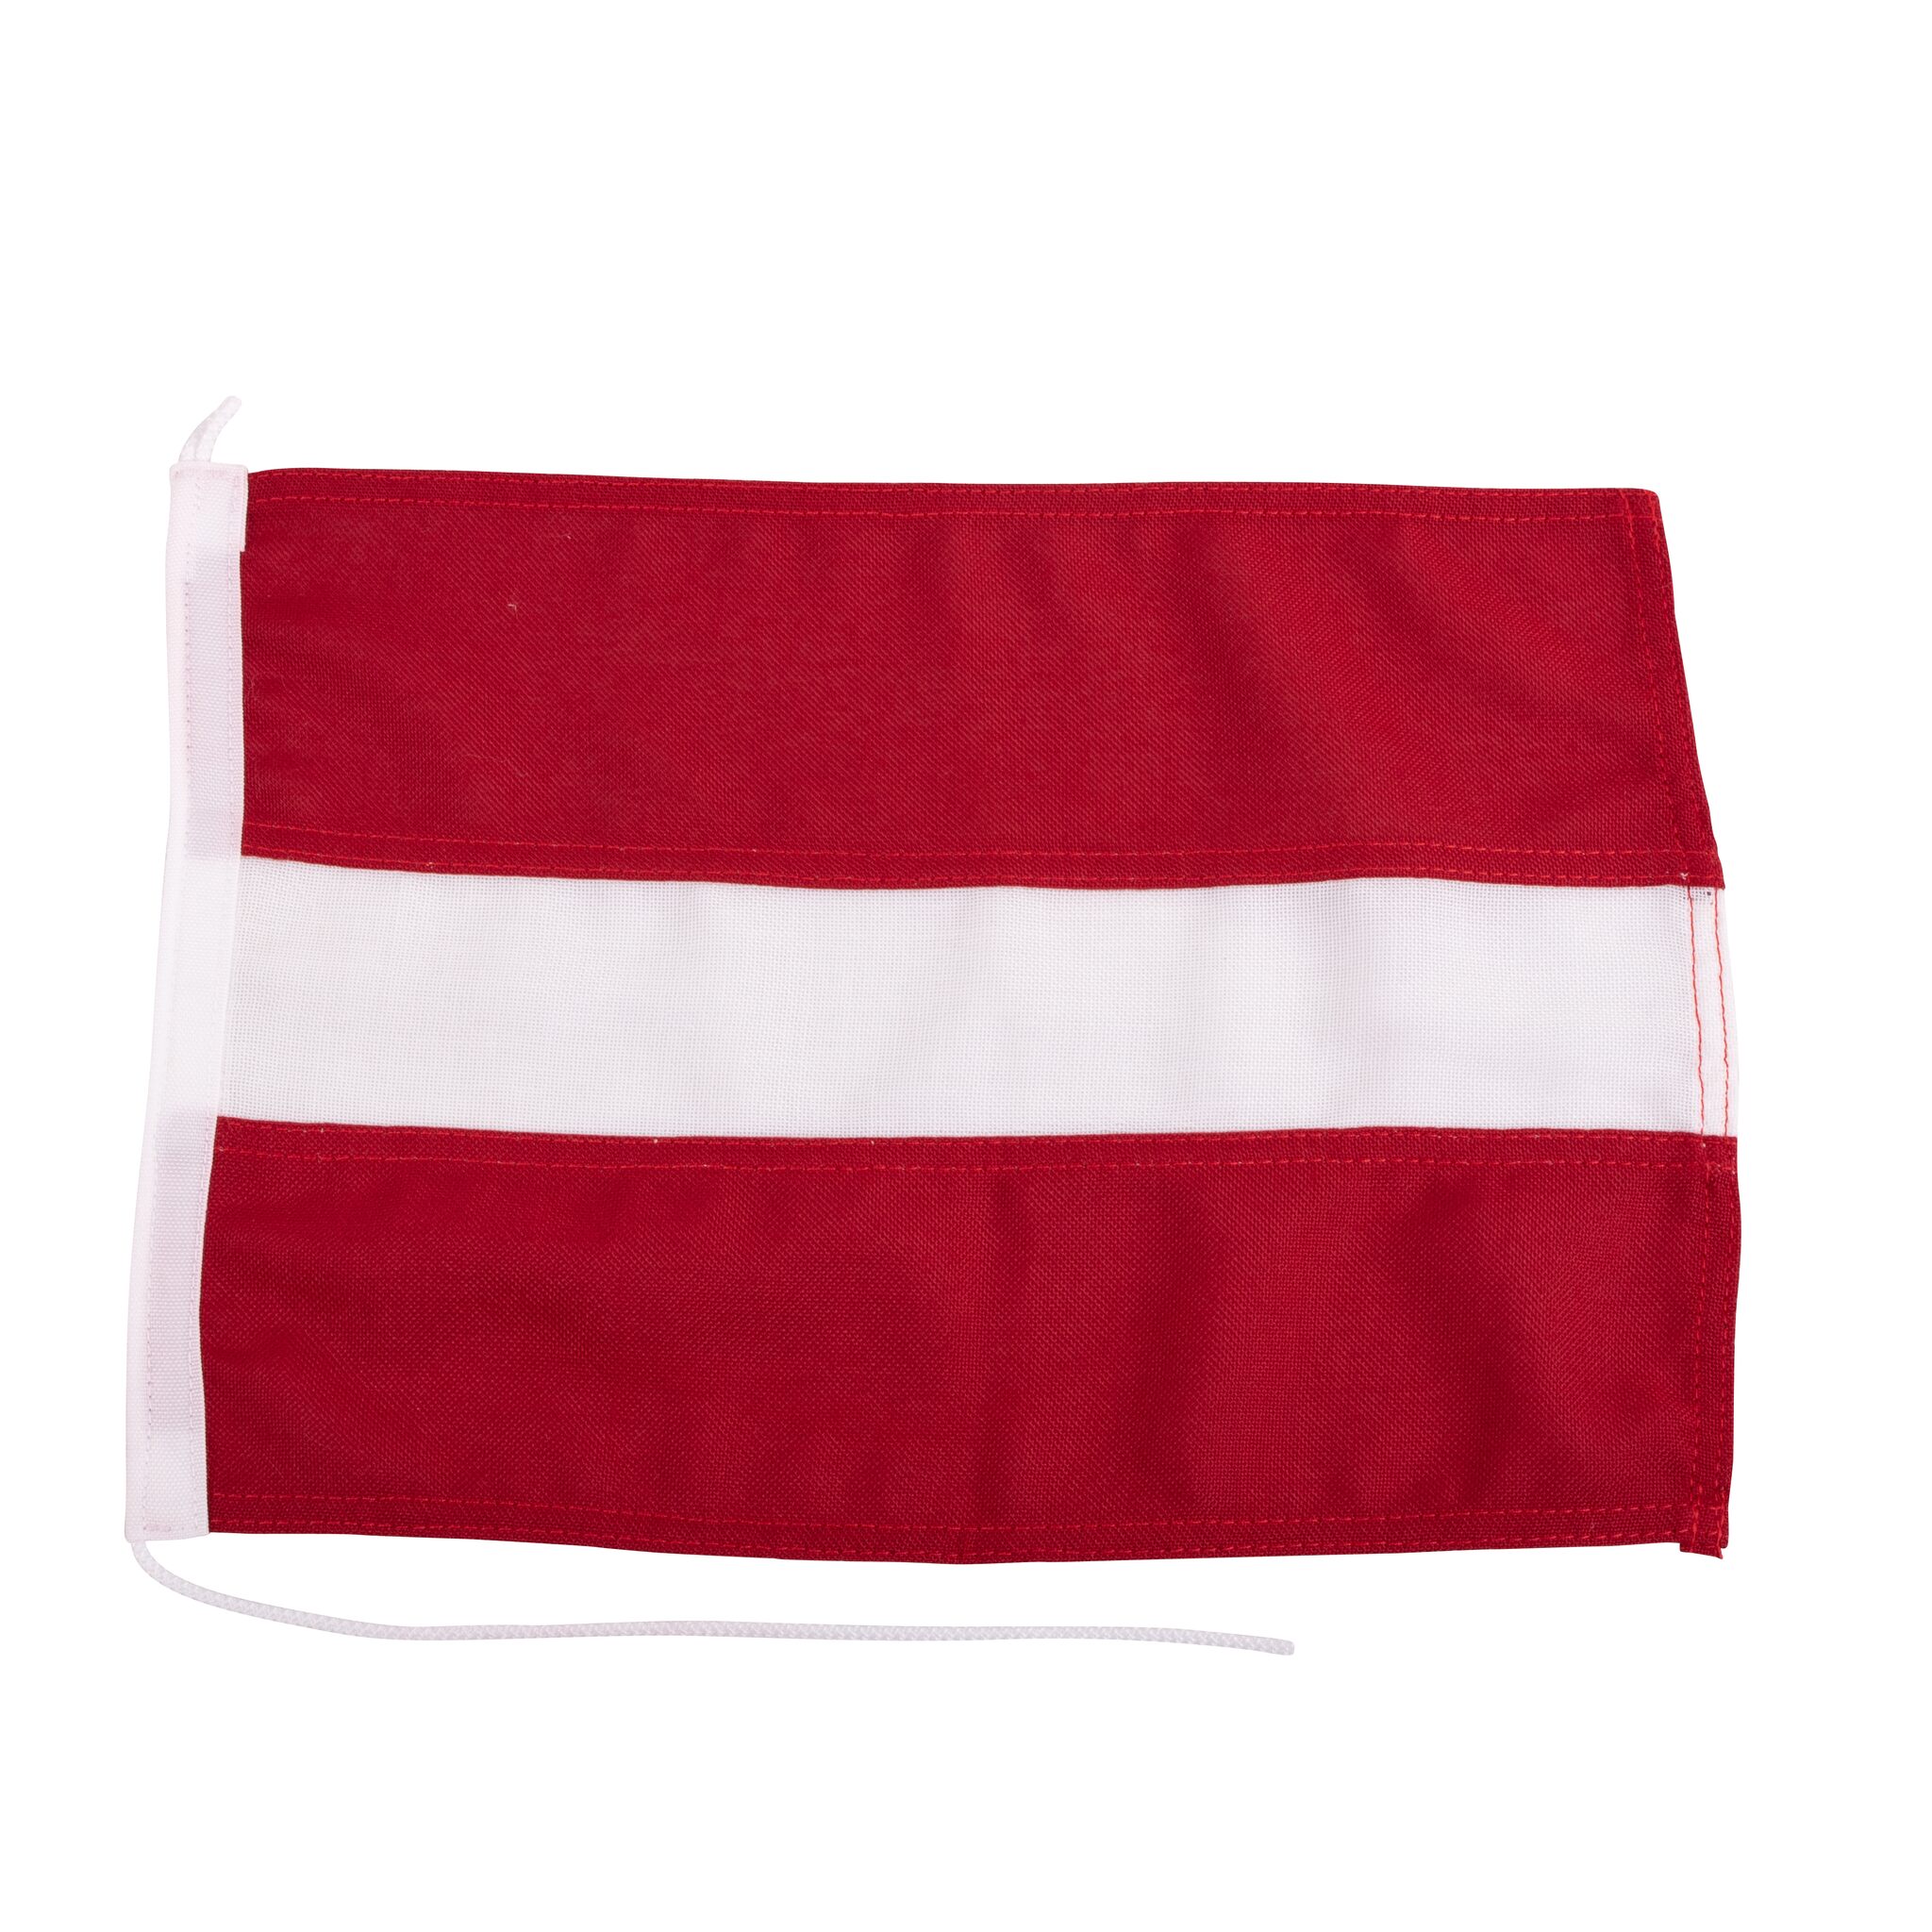 Gastlandflagge Lettland